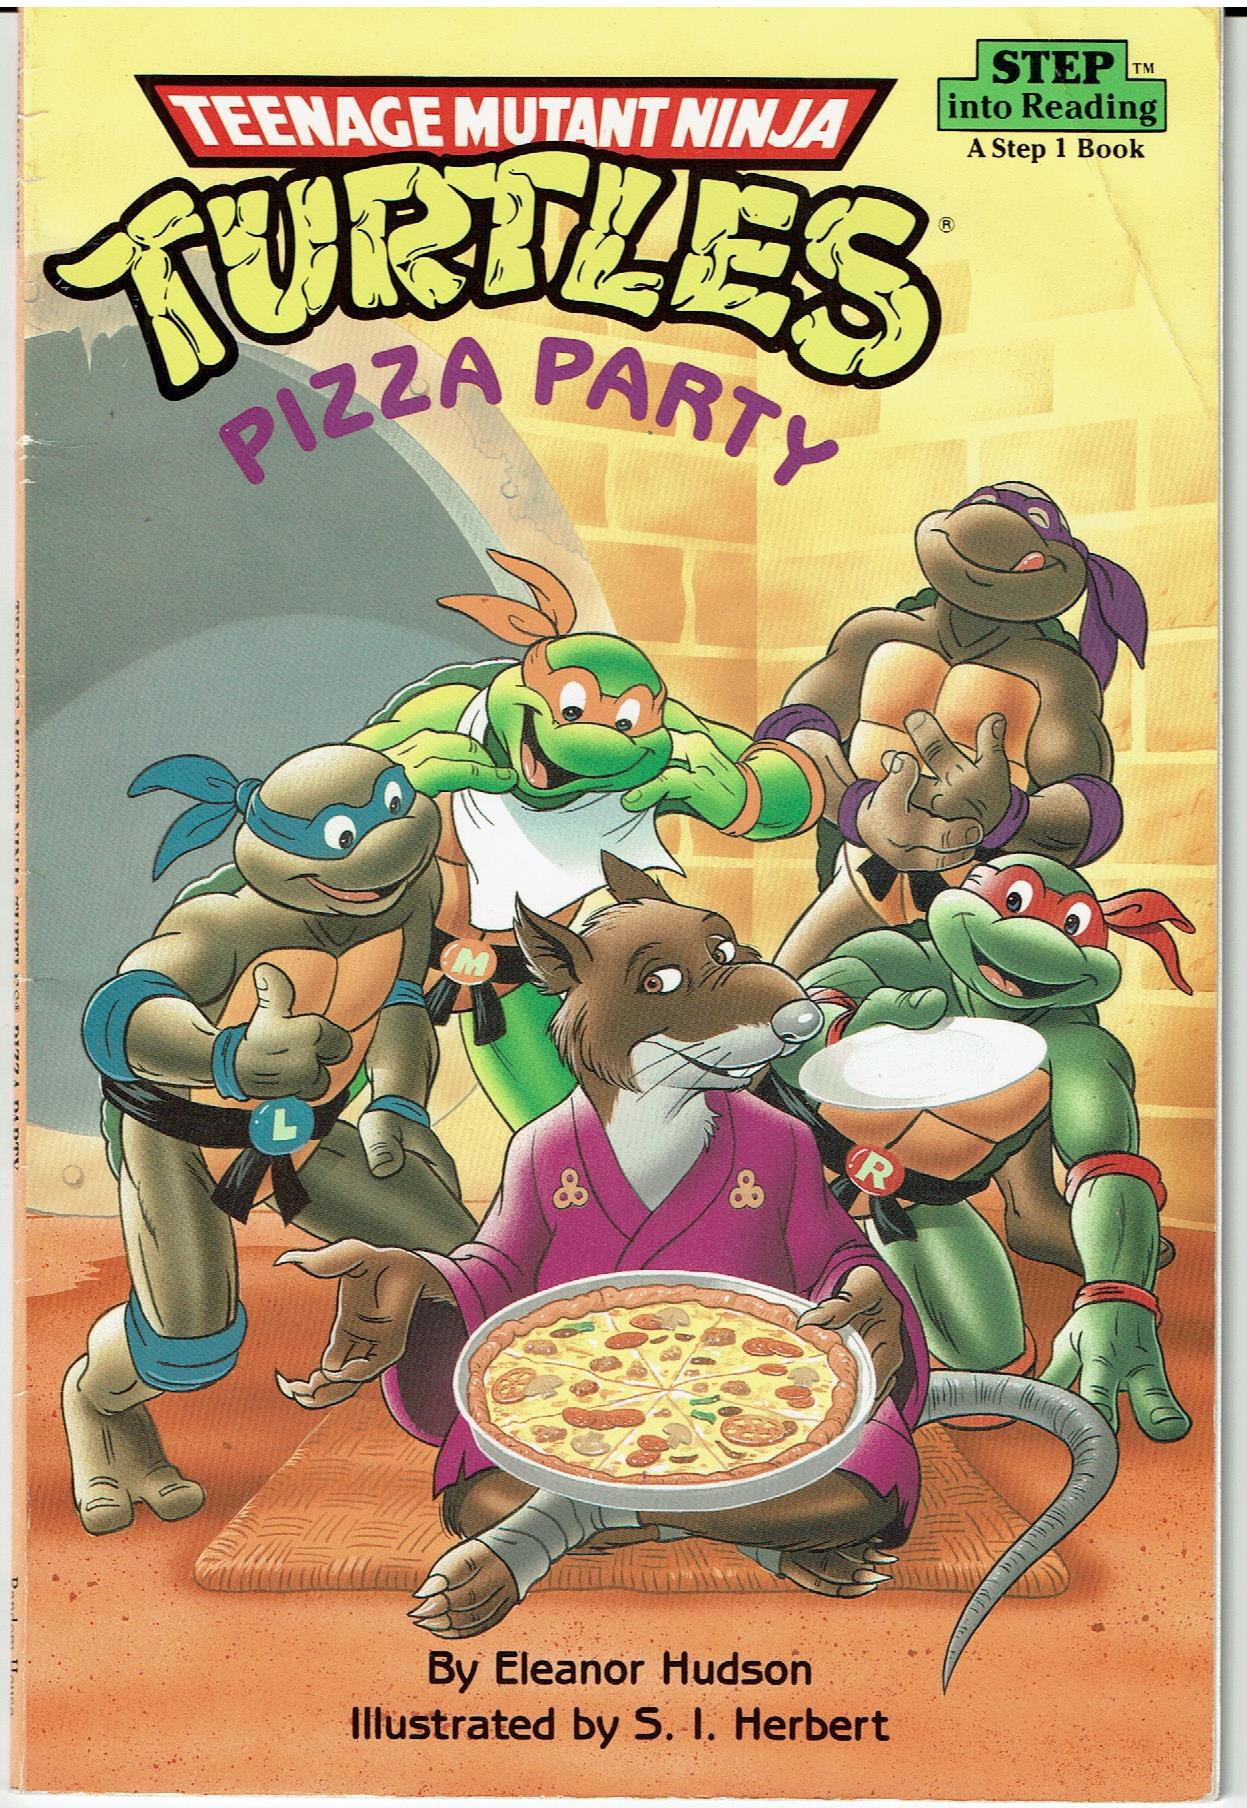 Women's Teenage Mutant Ninja Turtles Pizza Forever Scoop Neck - White -  Small